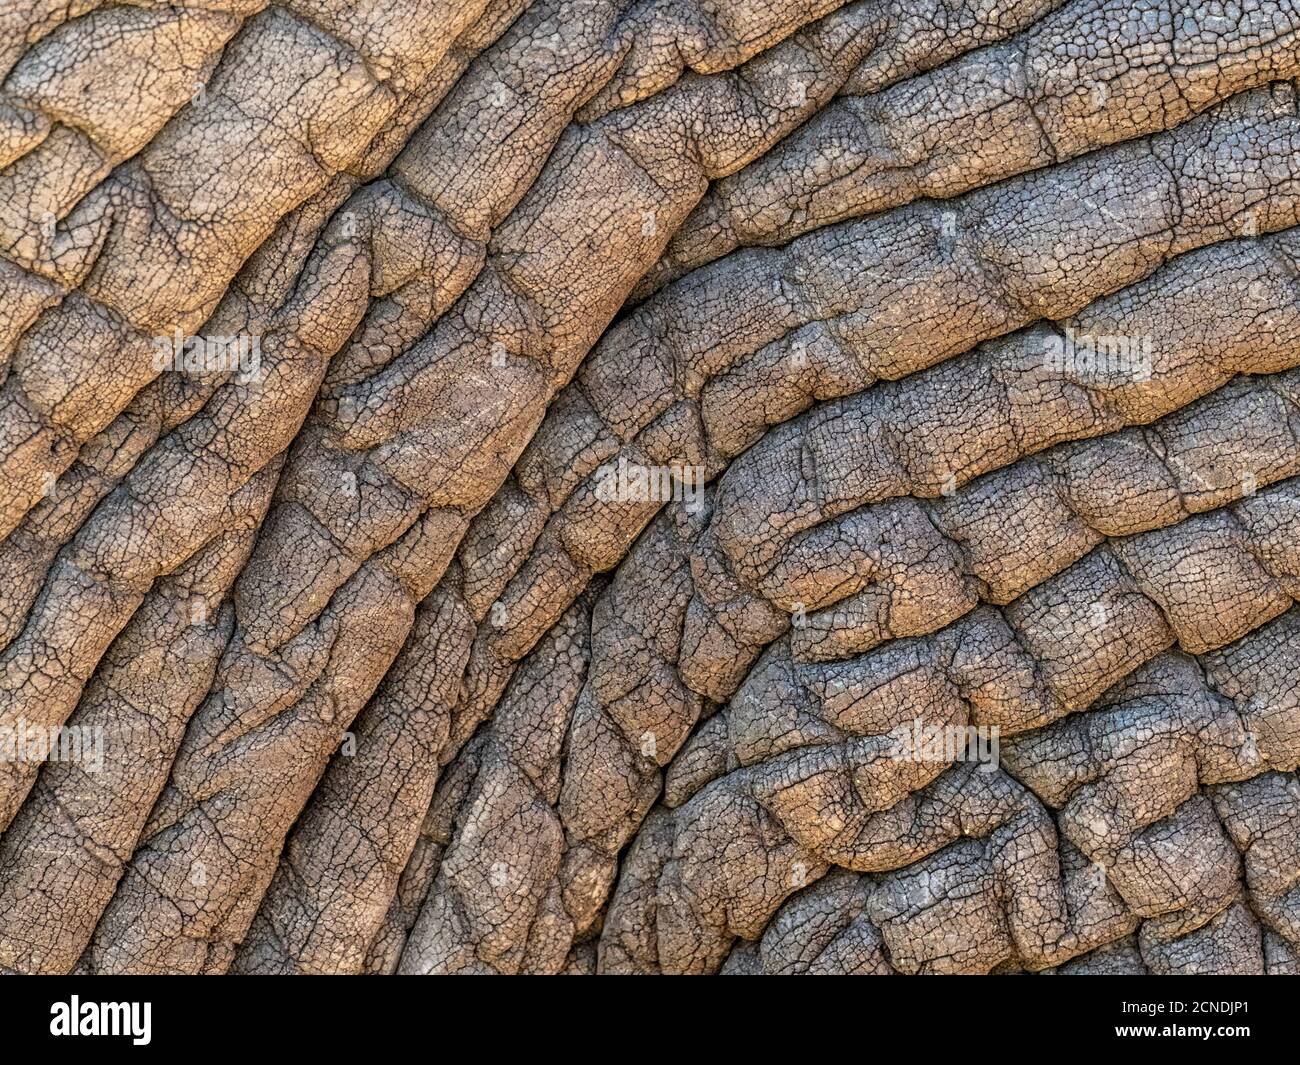 Elefante afoso africano (Loxodonta africana), dettaglio della pelle, Parco Nazionale Tarangire, Tanzania, Africa orientale, Africa Foto Stock